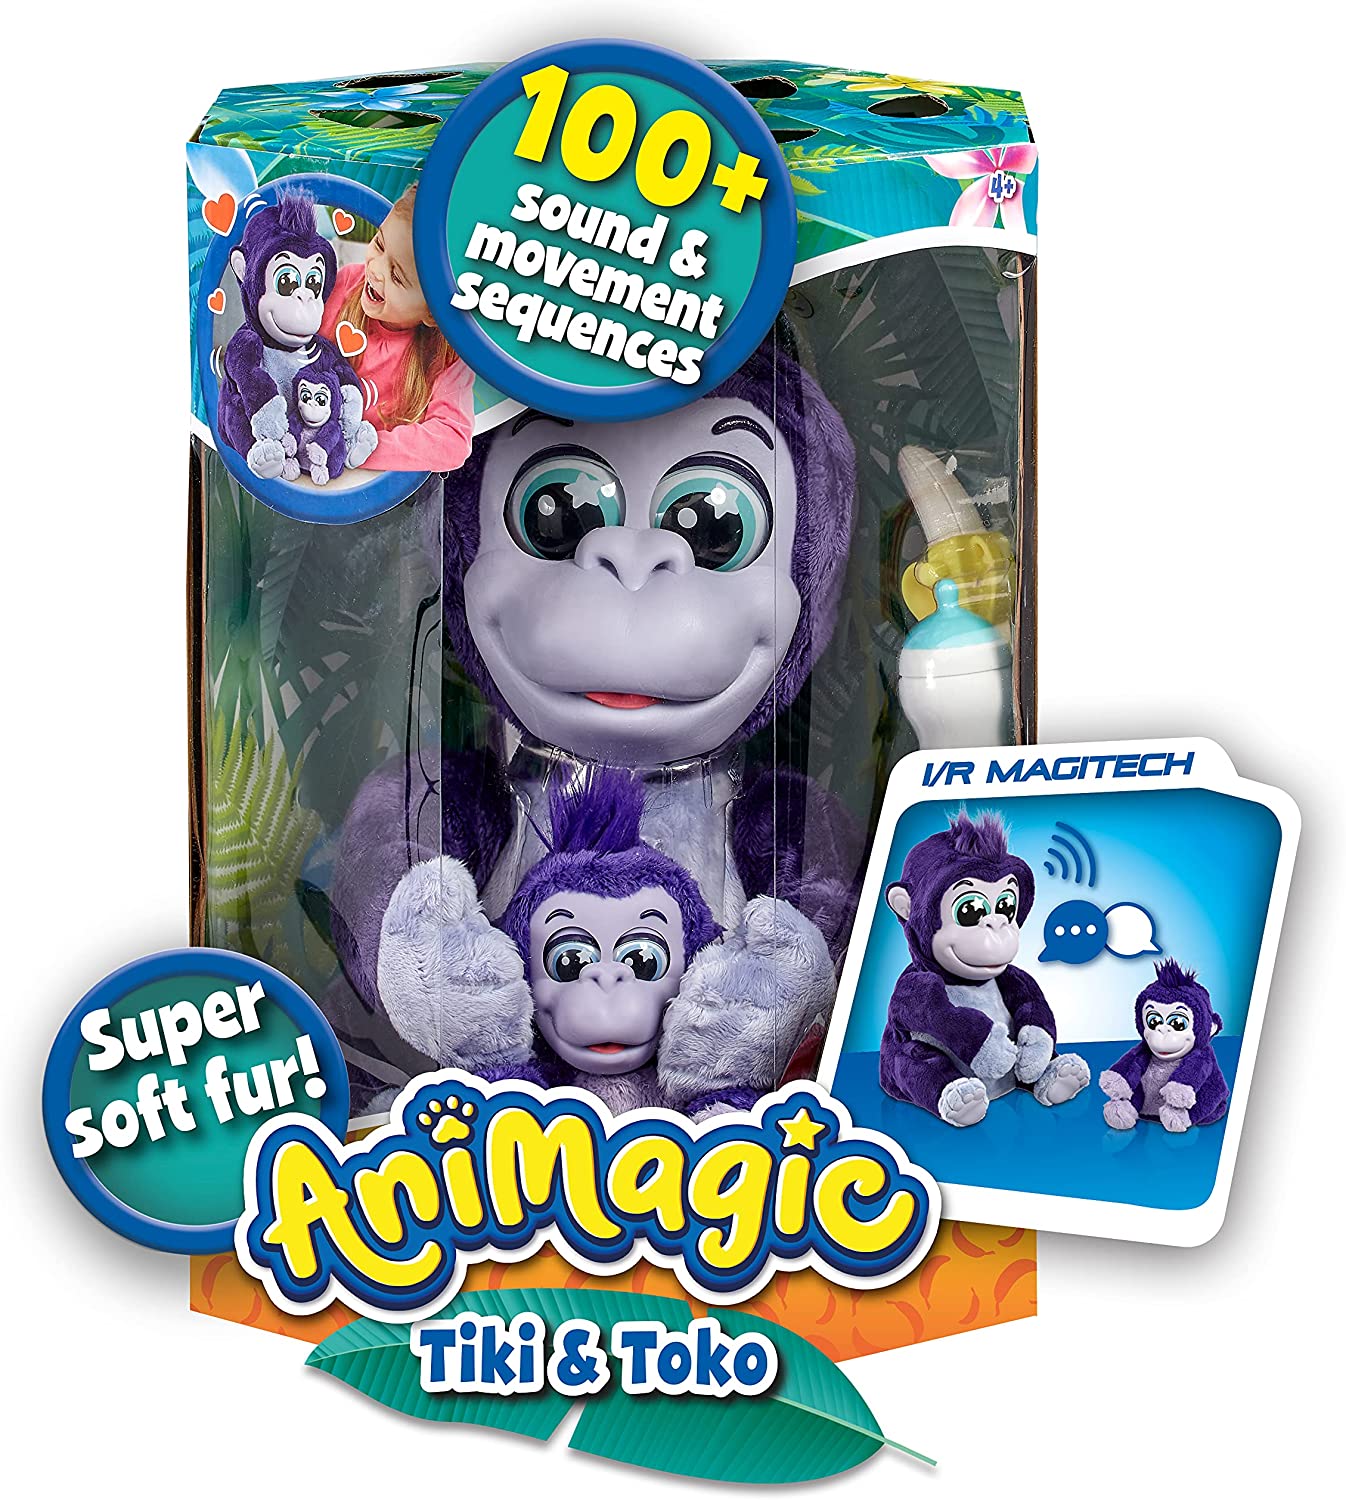 Tiki & Toko Gorillas Animagic